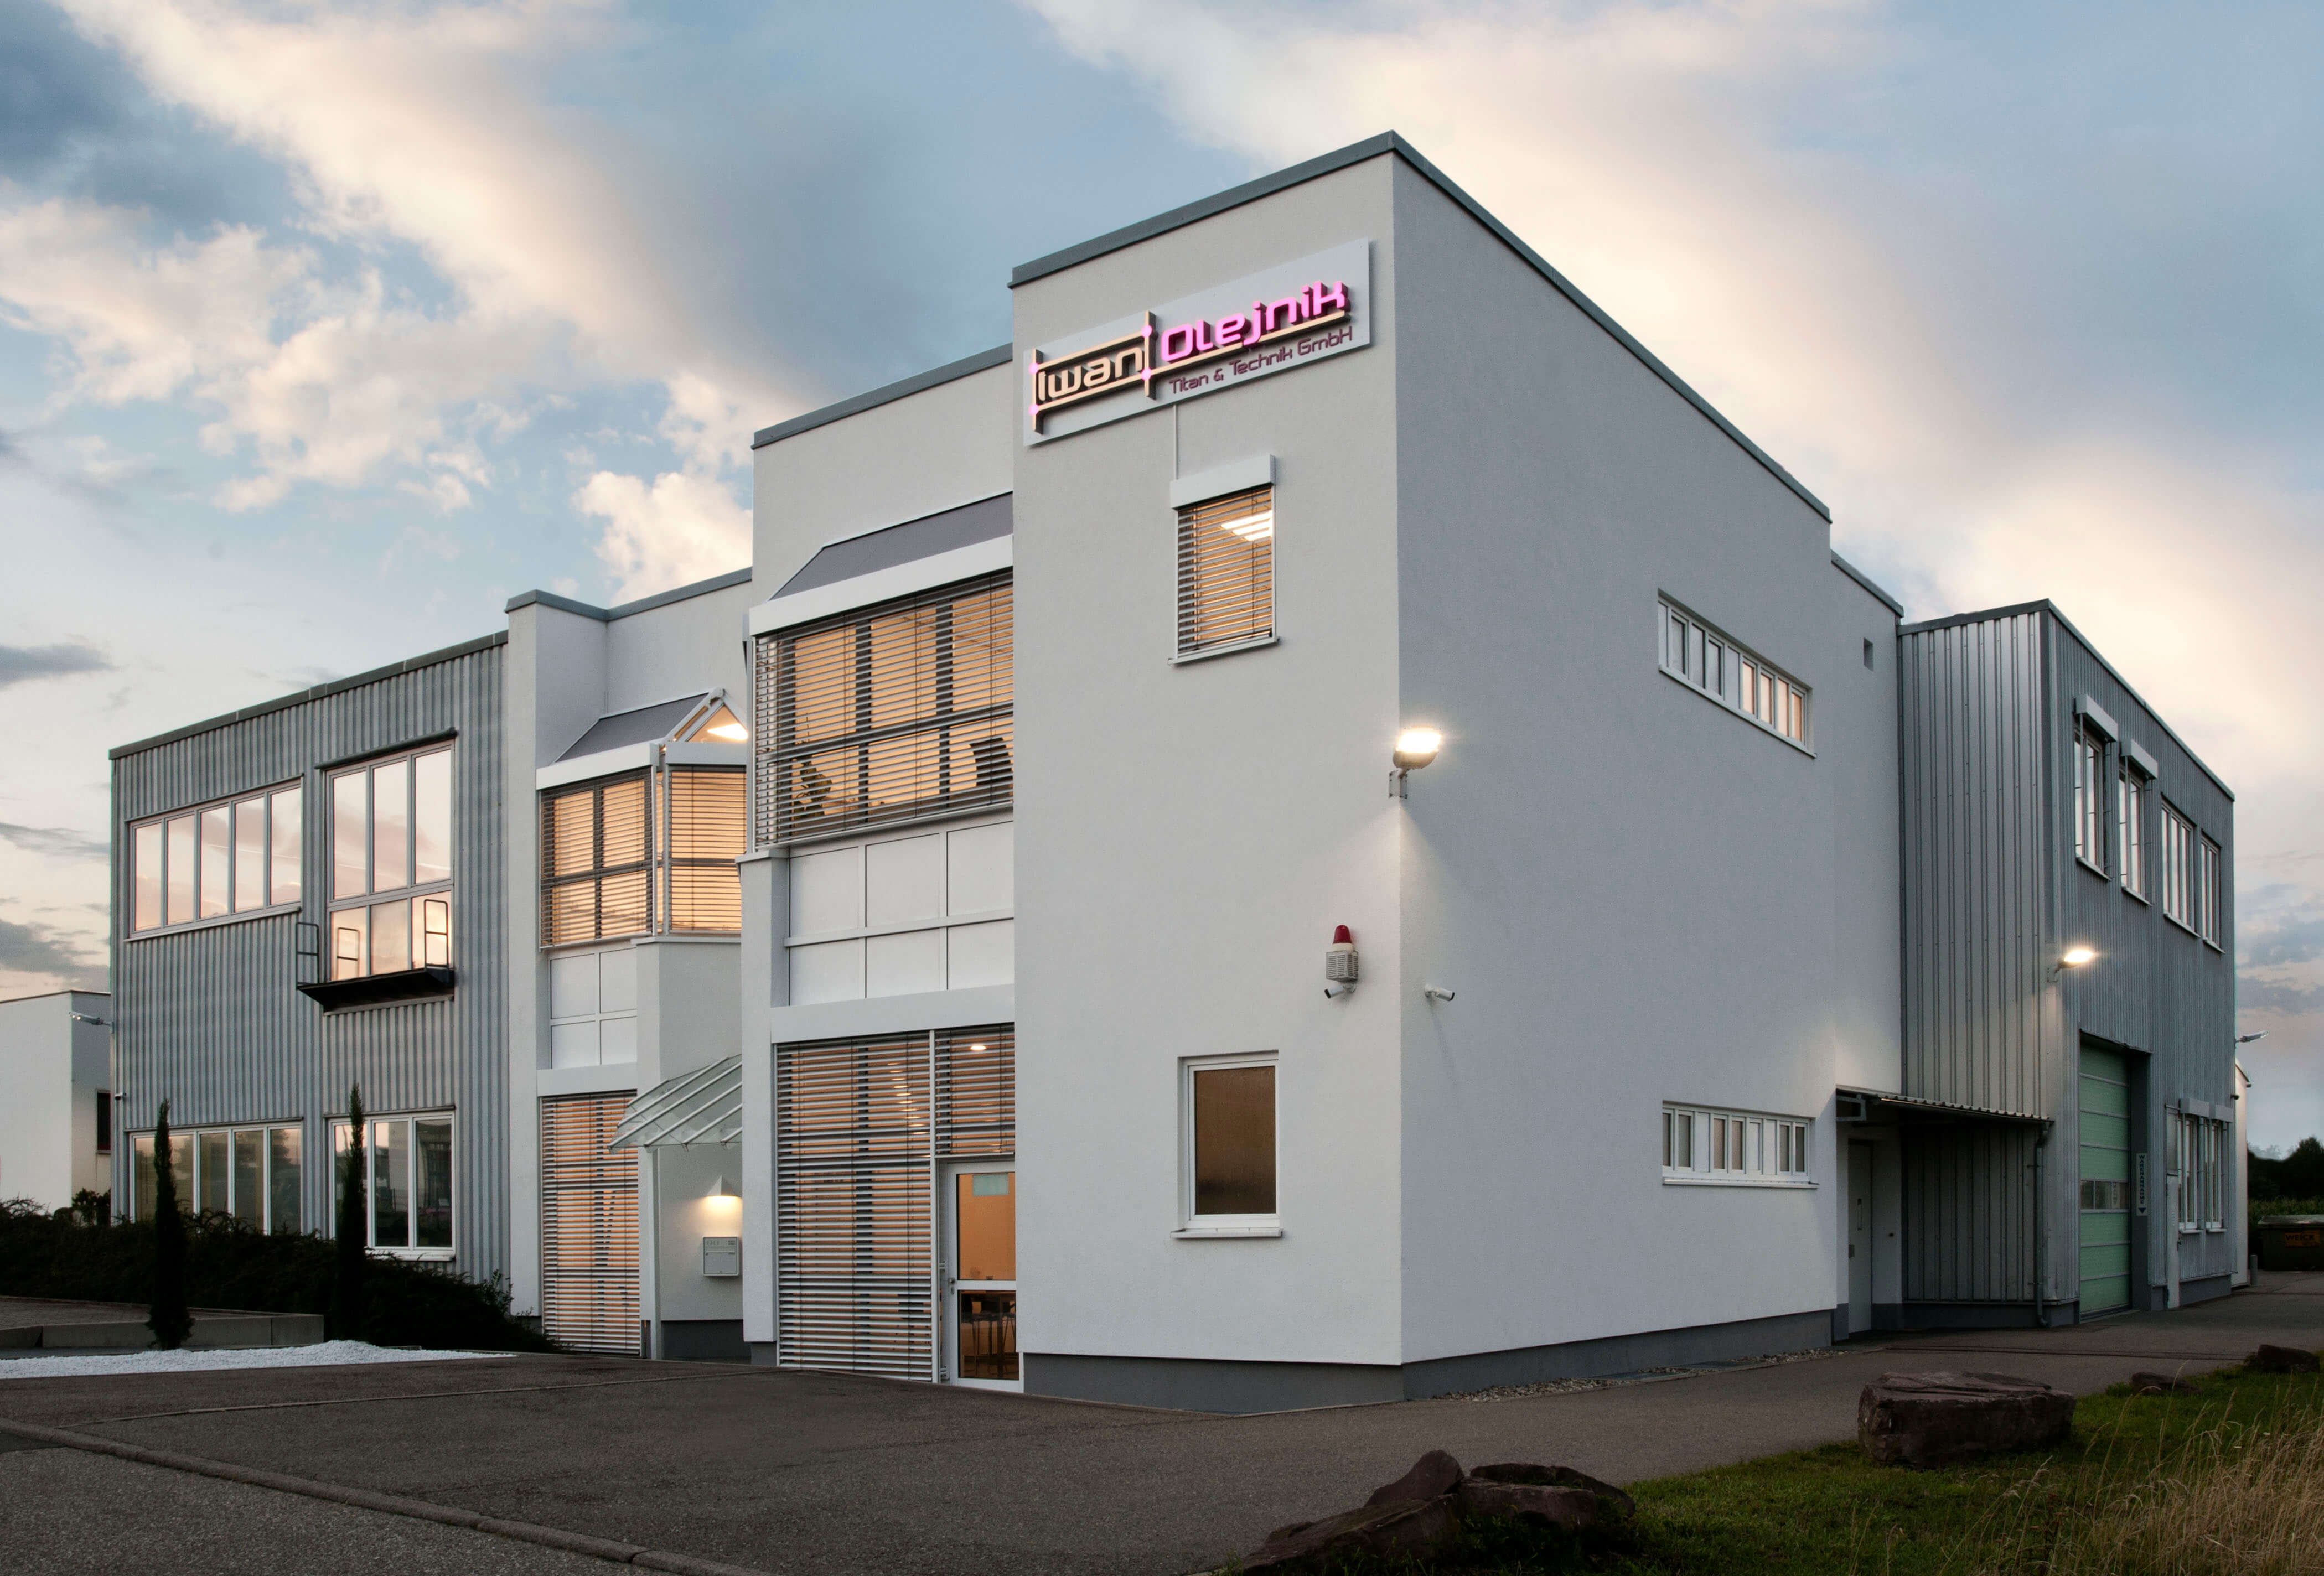 Firmengebäude Olejnik - CNC-Technik mittlerer Größe